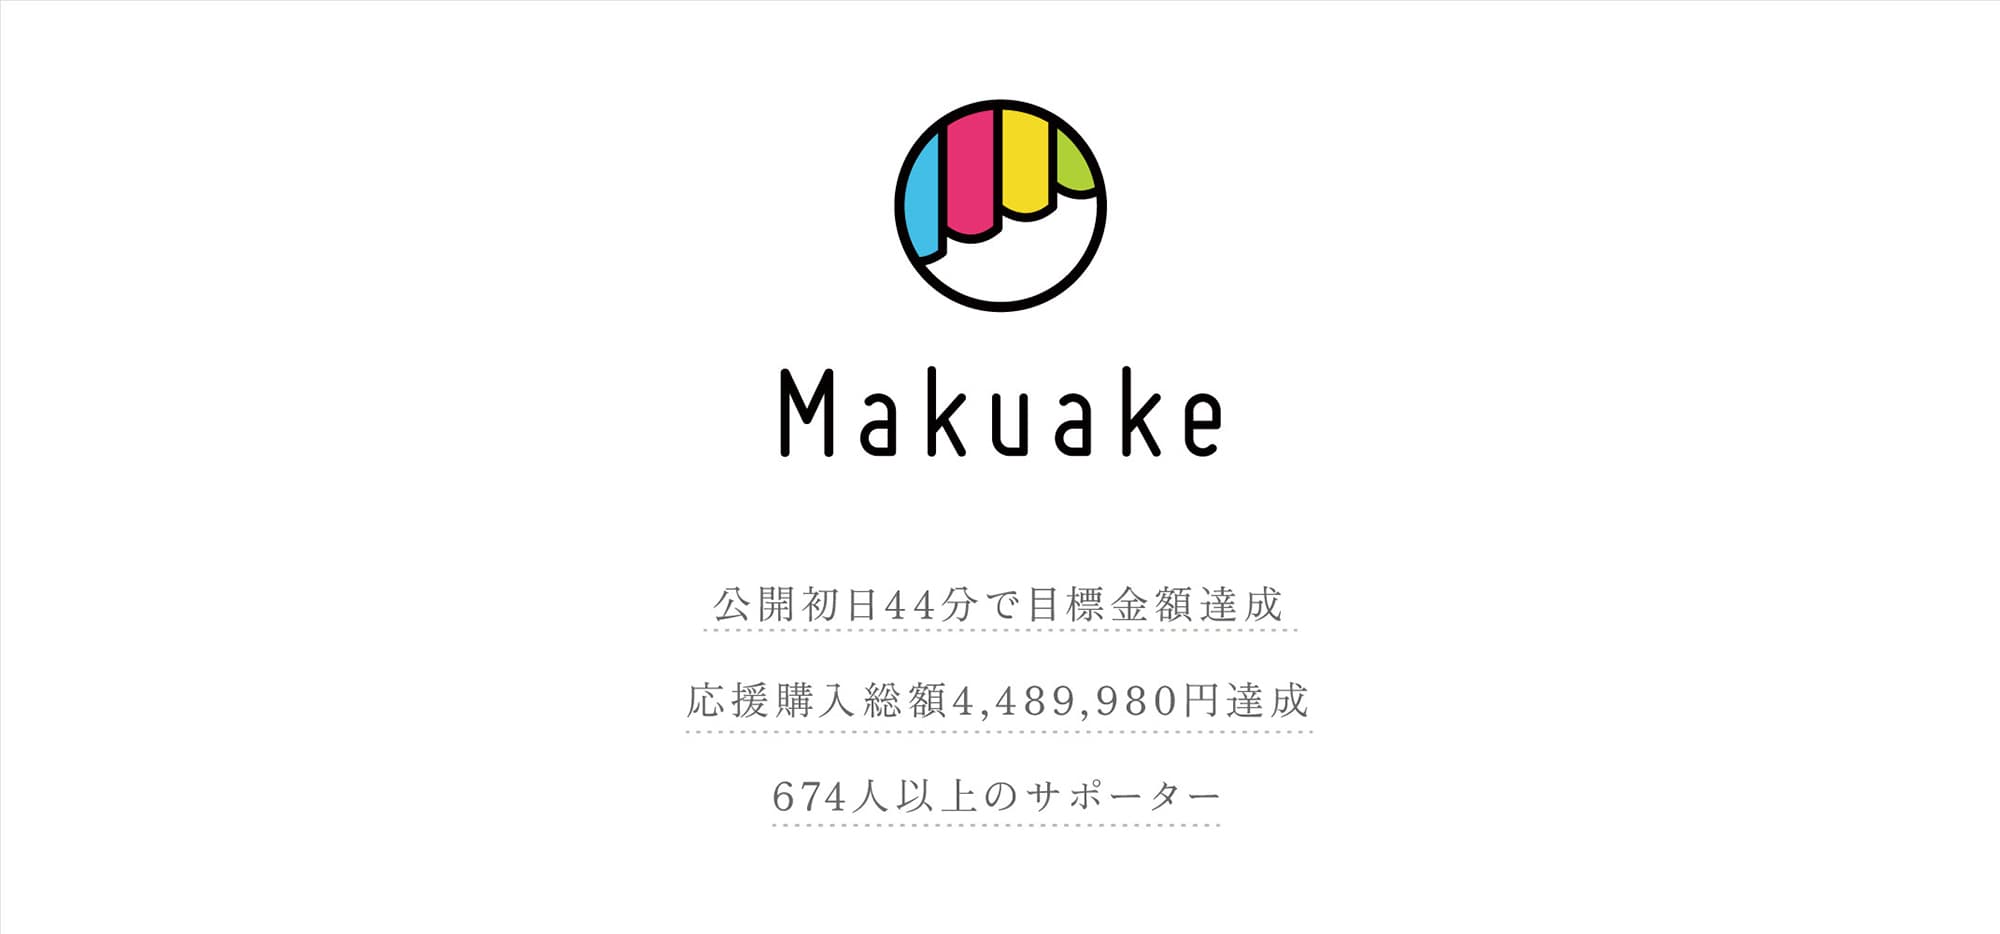 Makuake 公開初日44分で目標達成。応援購入総額4,489,980円達成。674人以上のサポーター